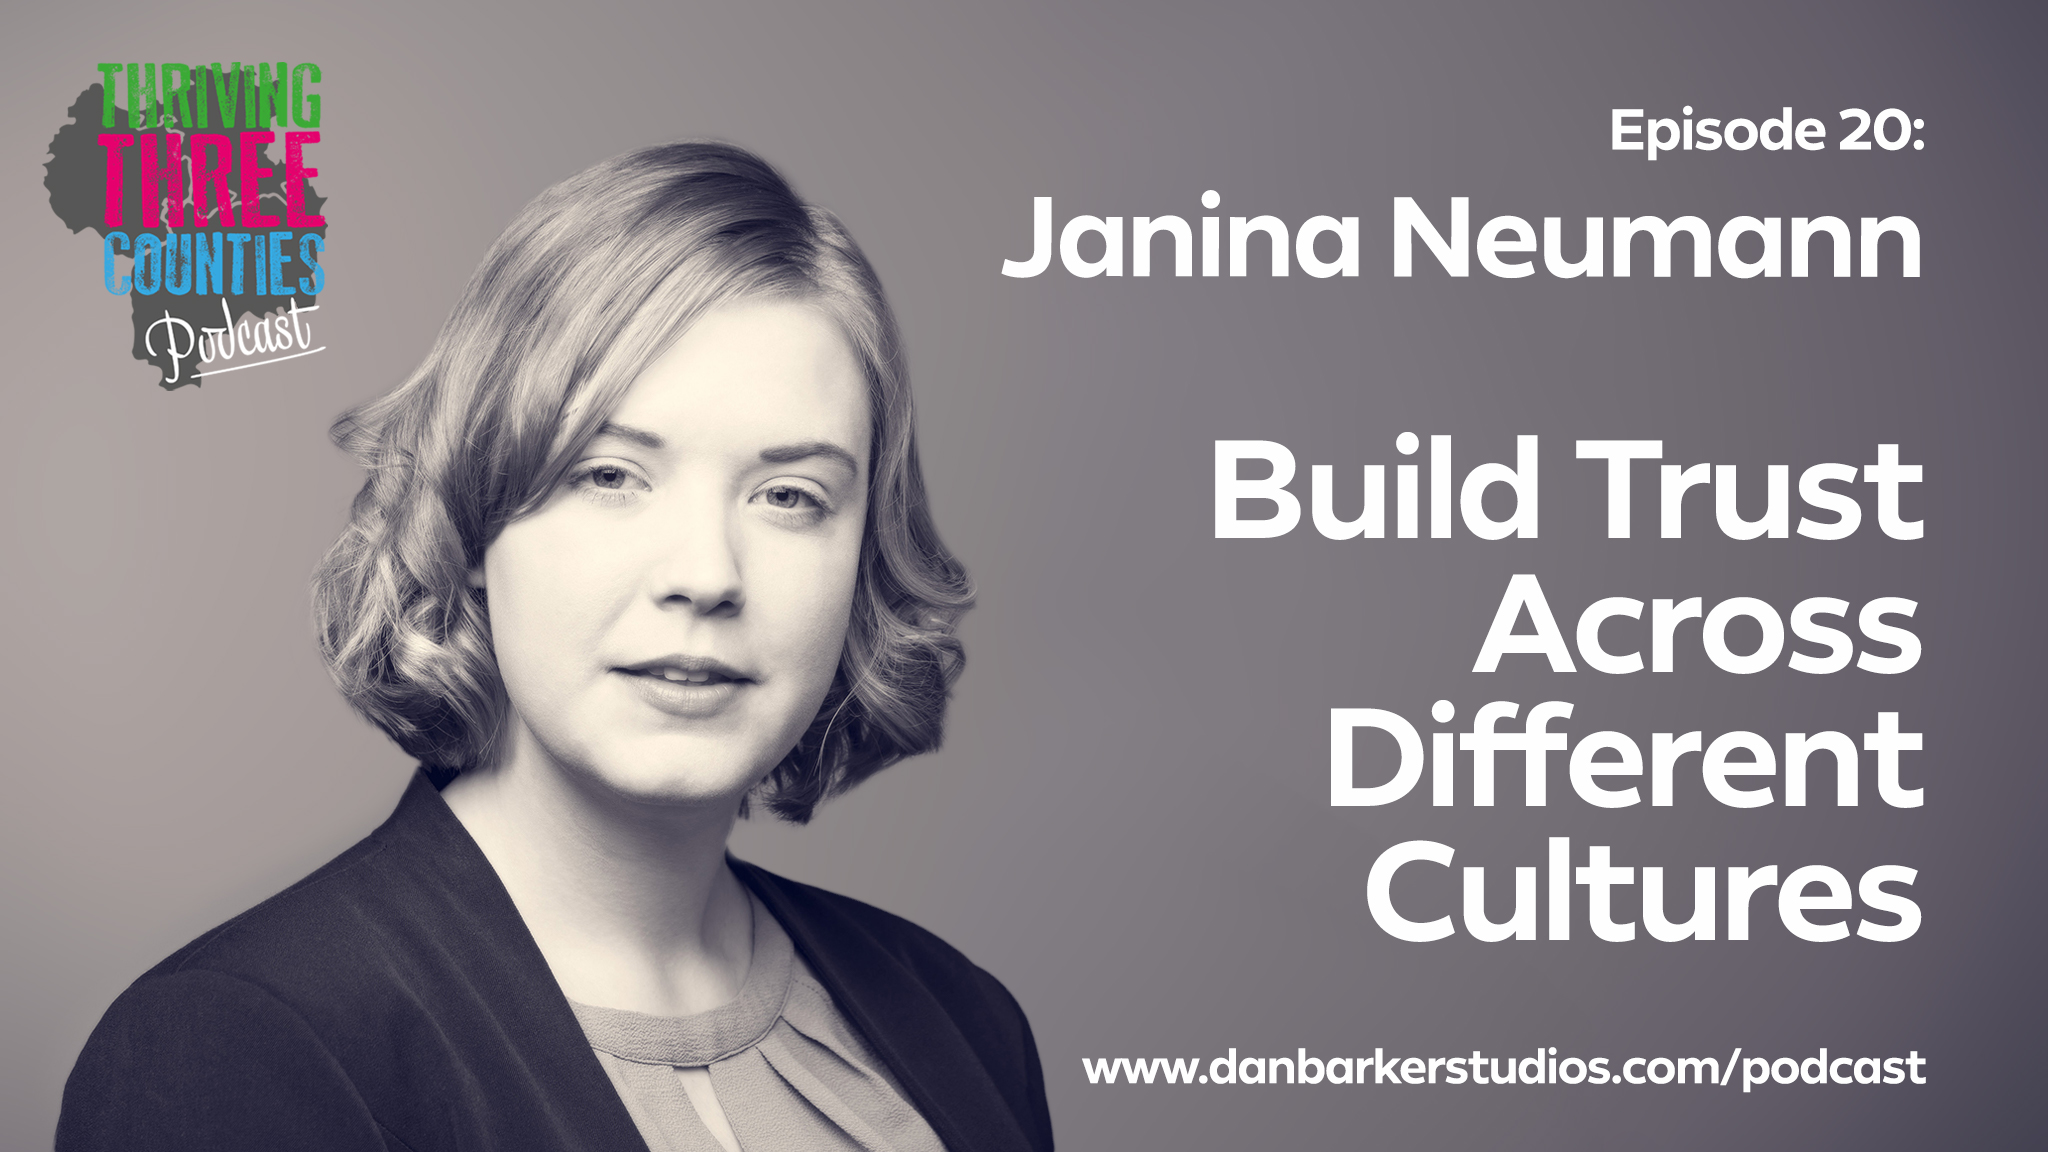 Headshot of Janina Neumann, text says "Episode 20: Janina Neumann, build trust across different cultures"